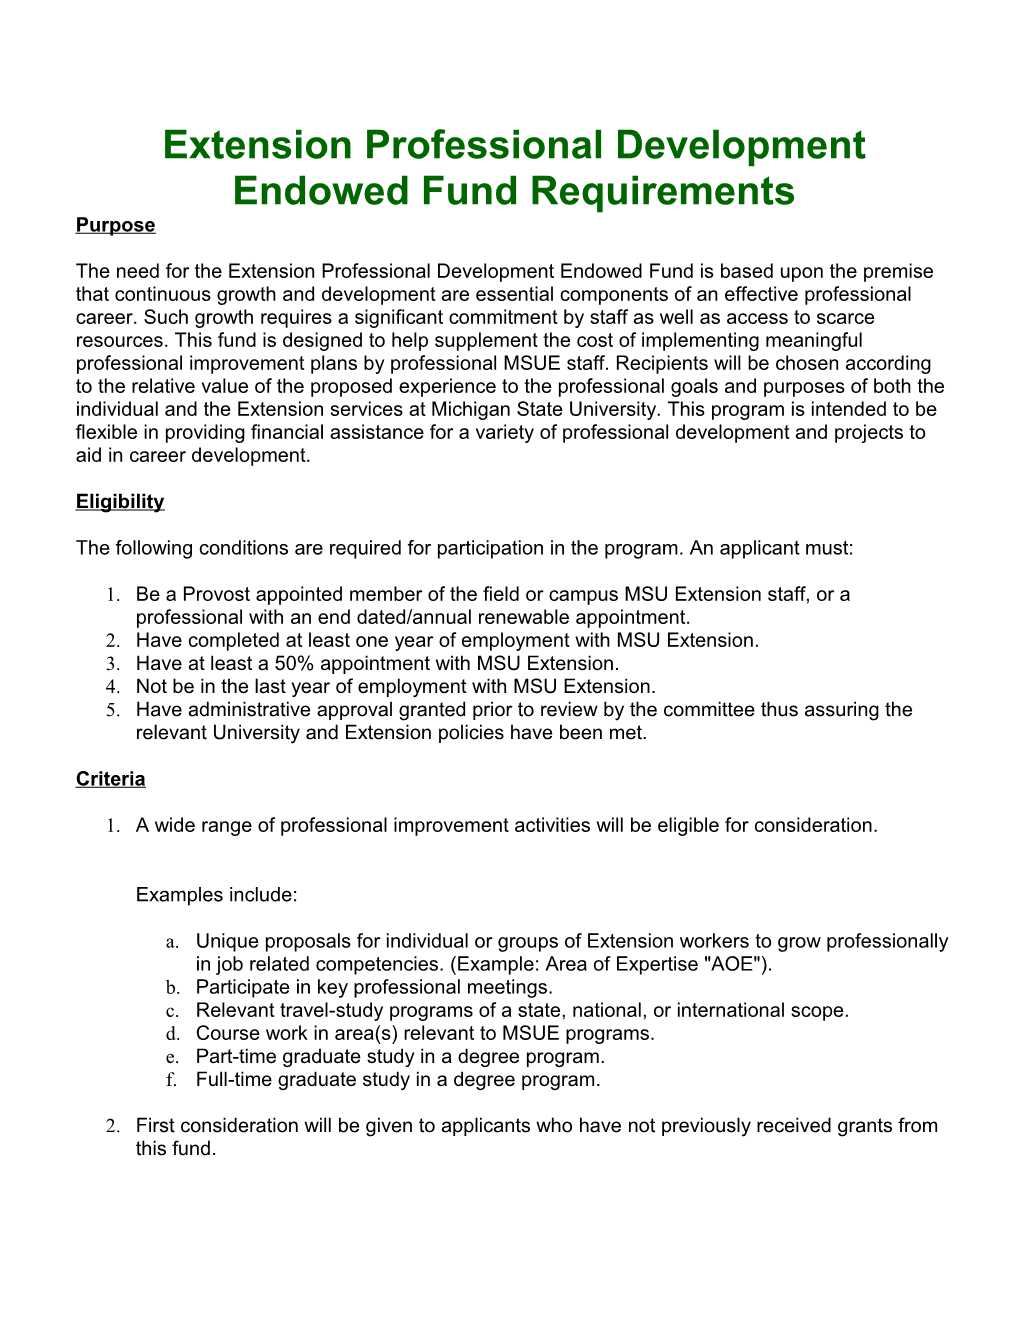 Extension Professional Development Endowed Fund Requirements